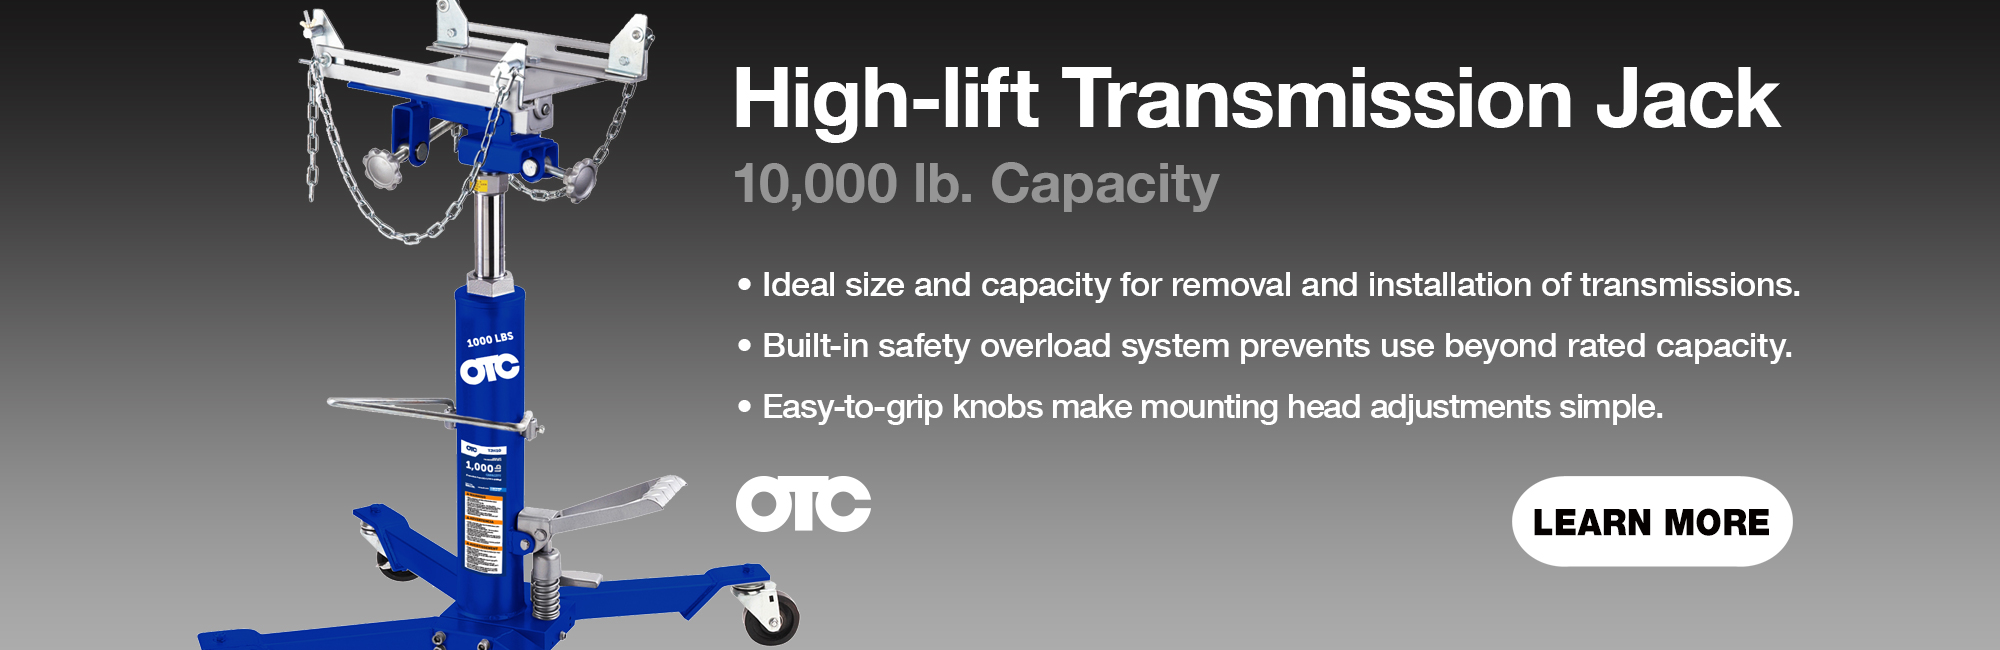 1,000-lb capacity high-lift transmission jack